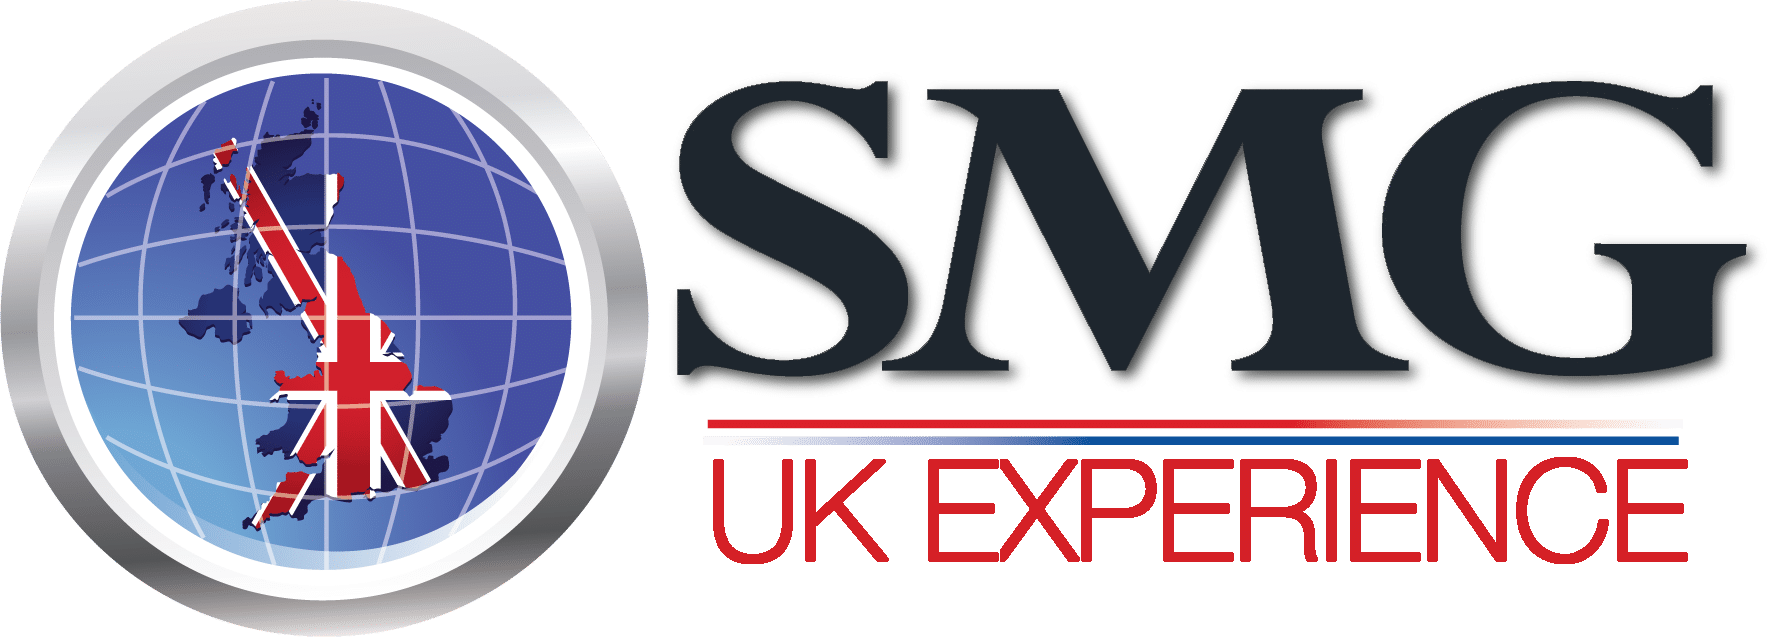 SMG UK Experience Logo11